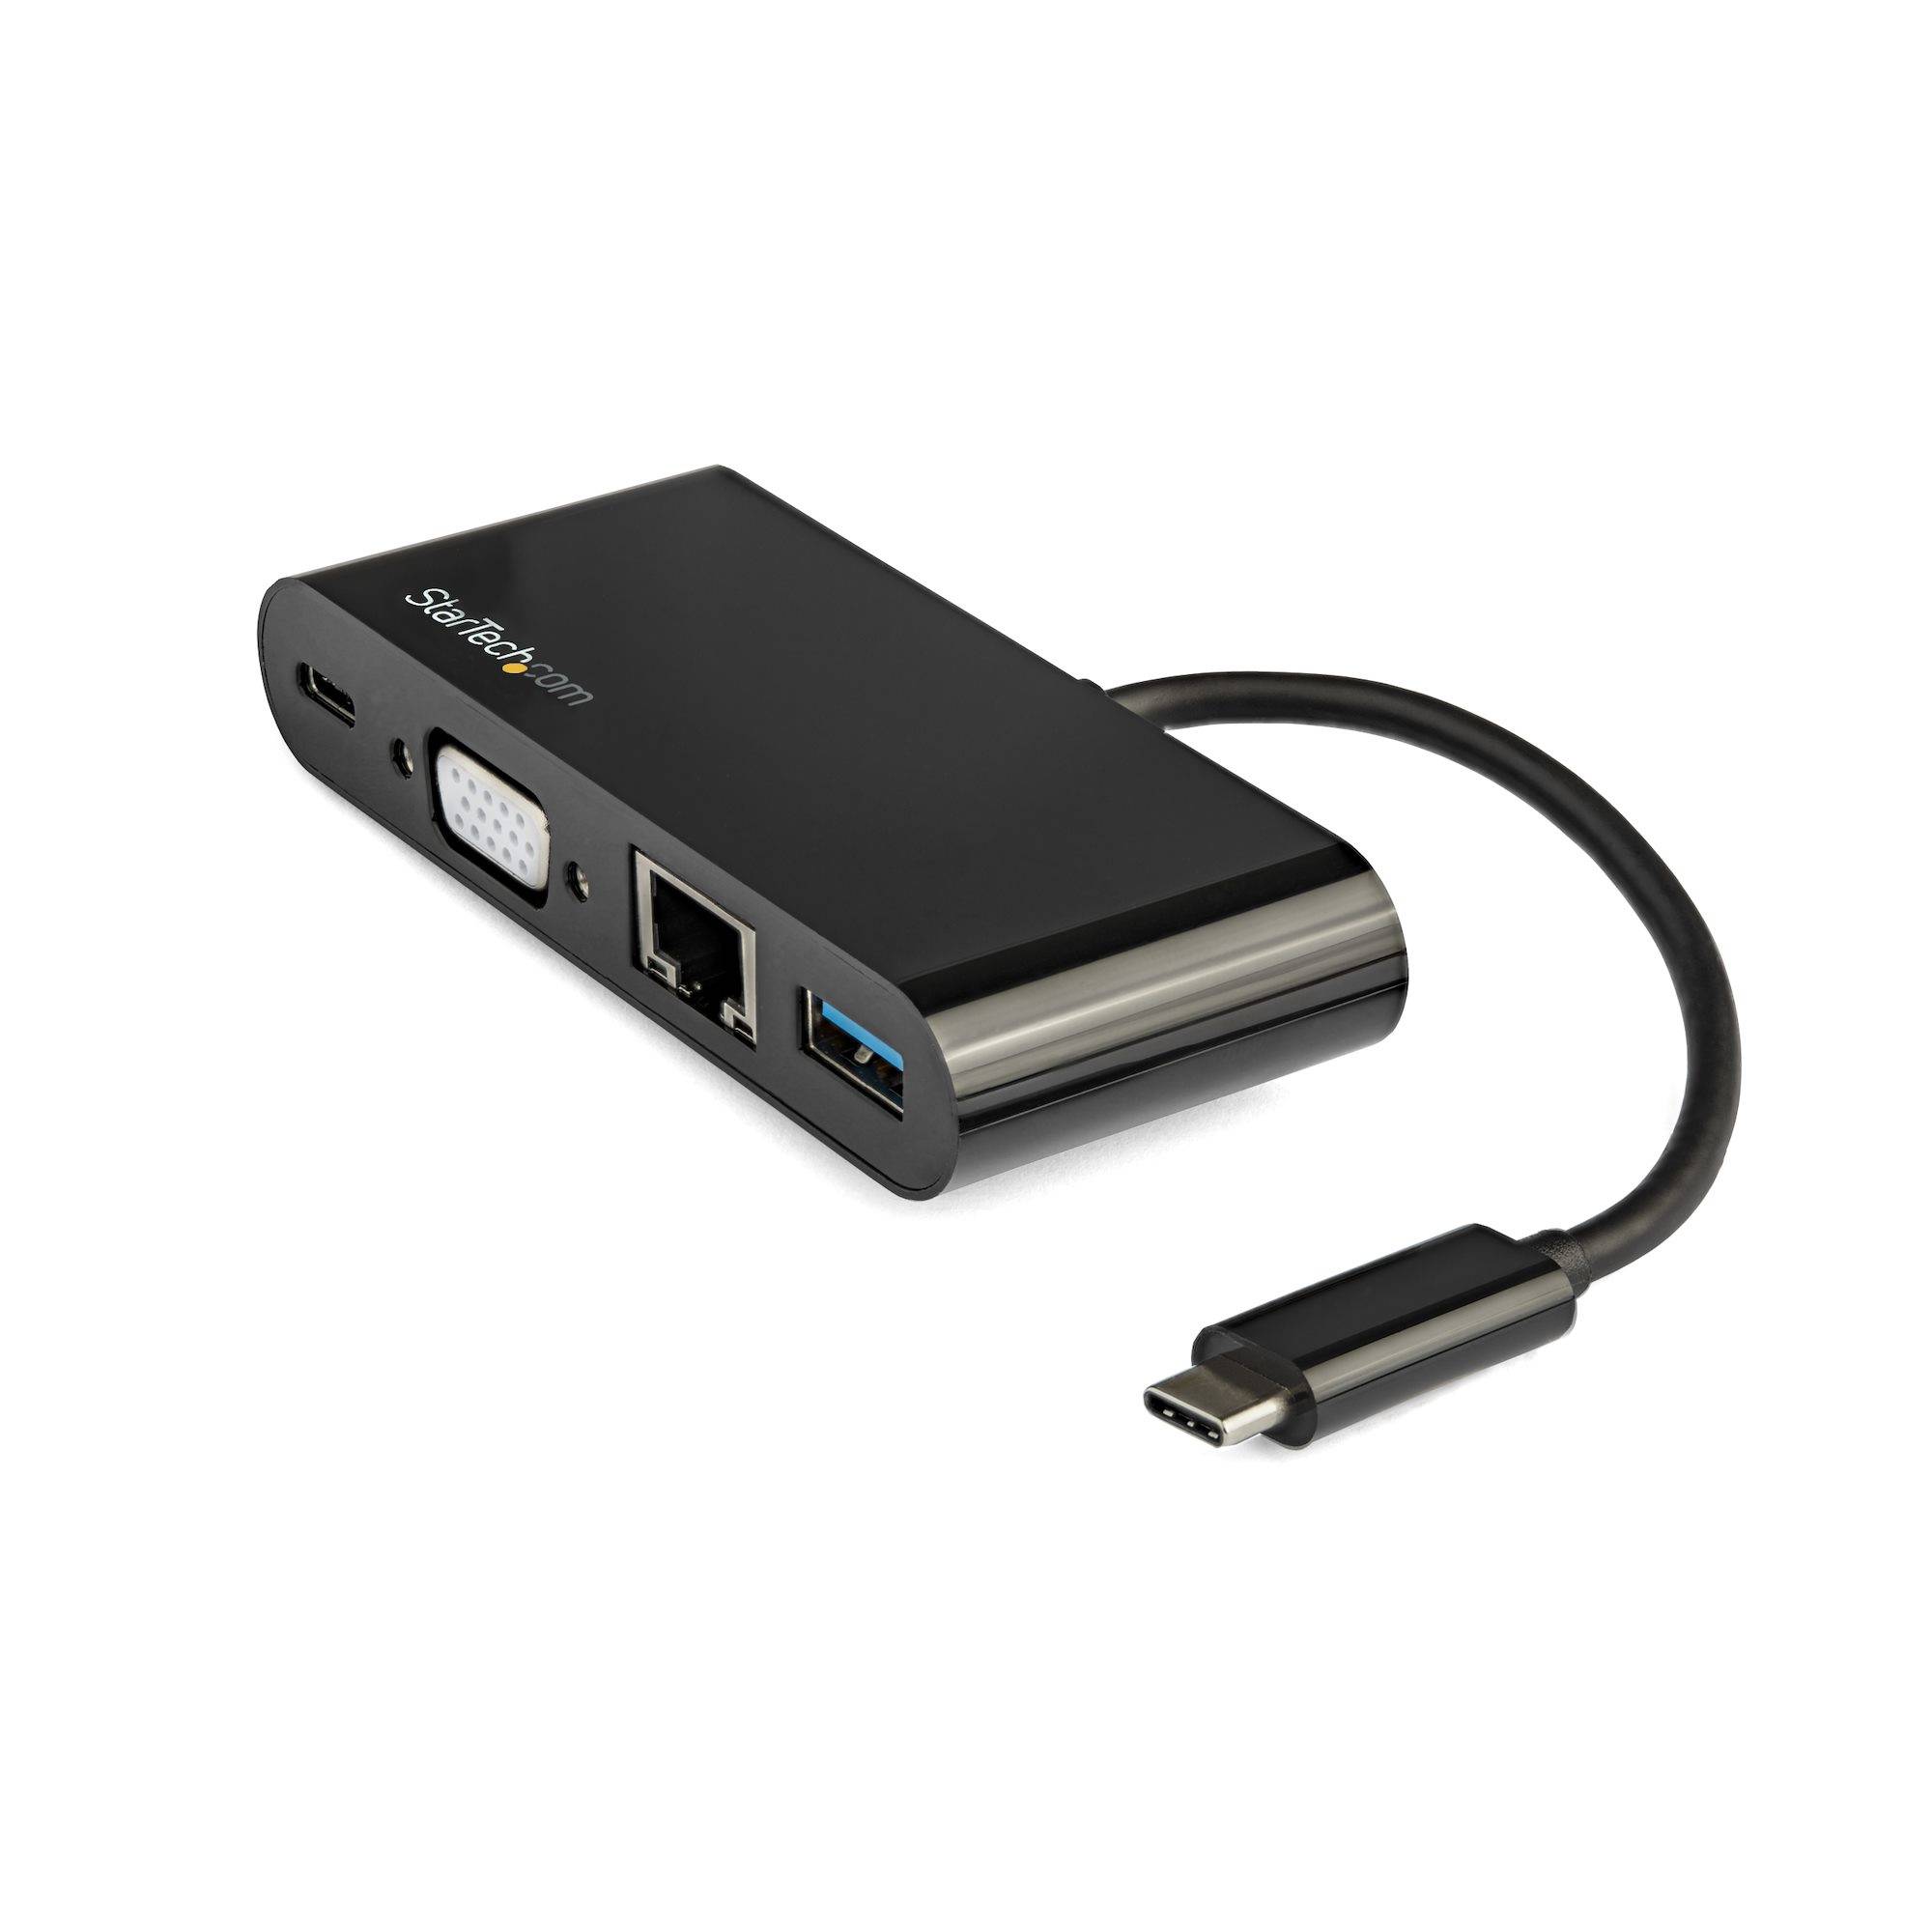 Rca Informatique - Image du produit : USB-C VGA MULTIPORT ADAPTER USB PD CHARGING 60W USB 3.0 GBE